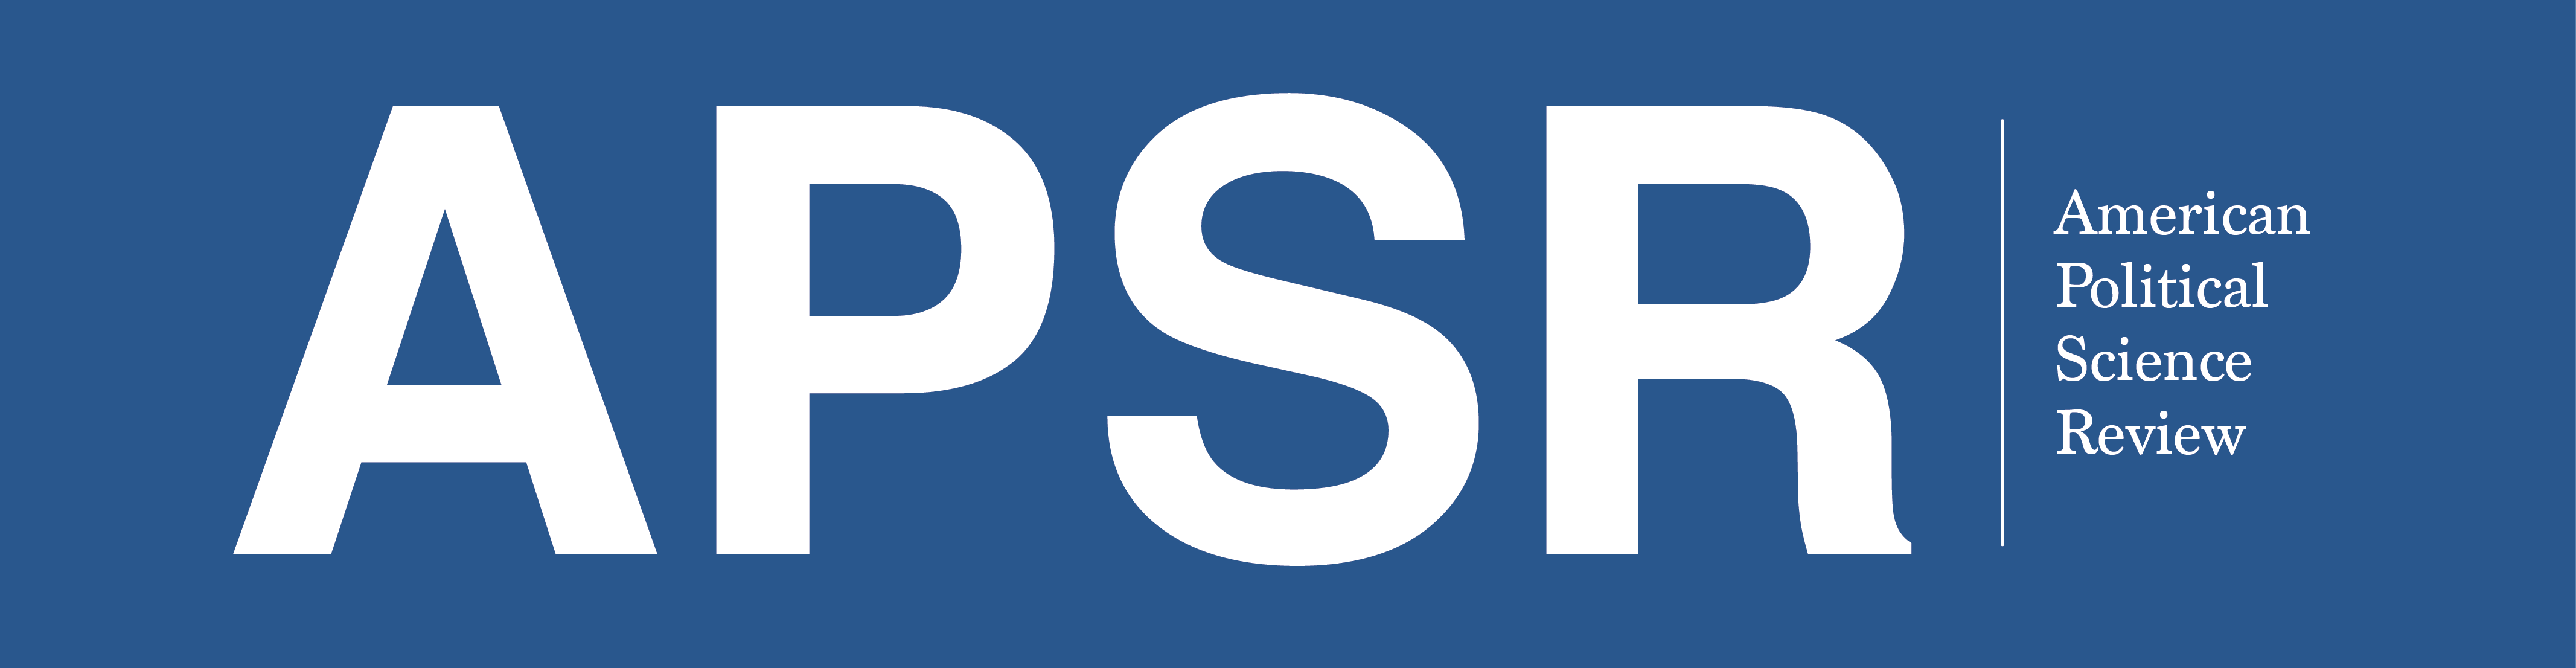 APSR banner-01